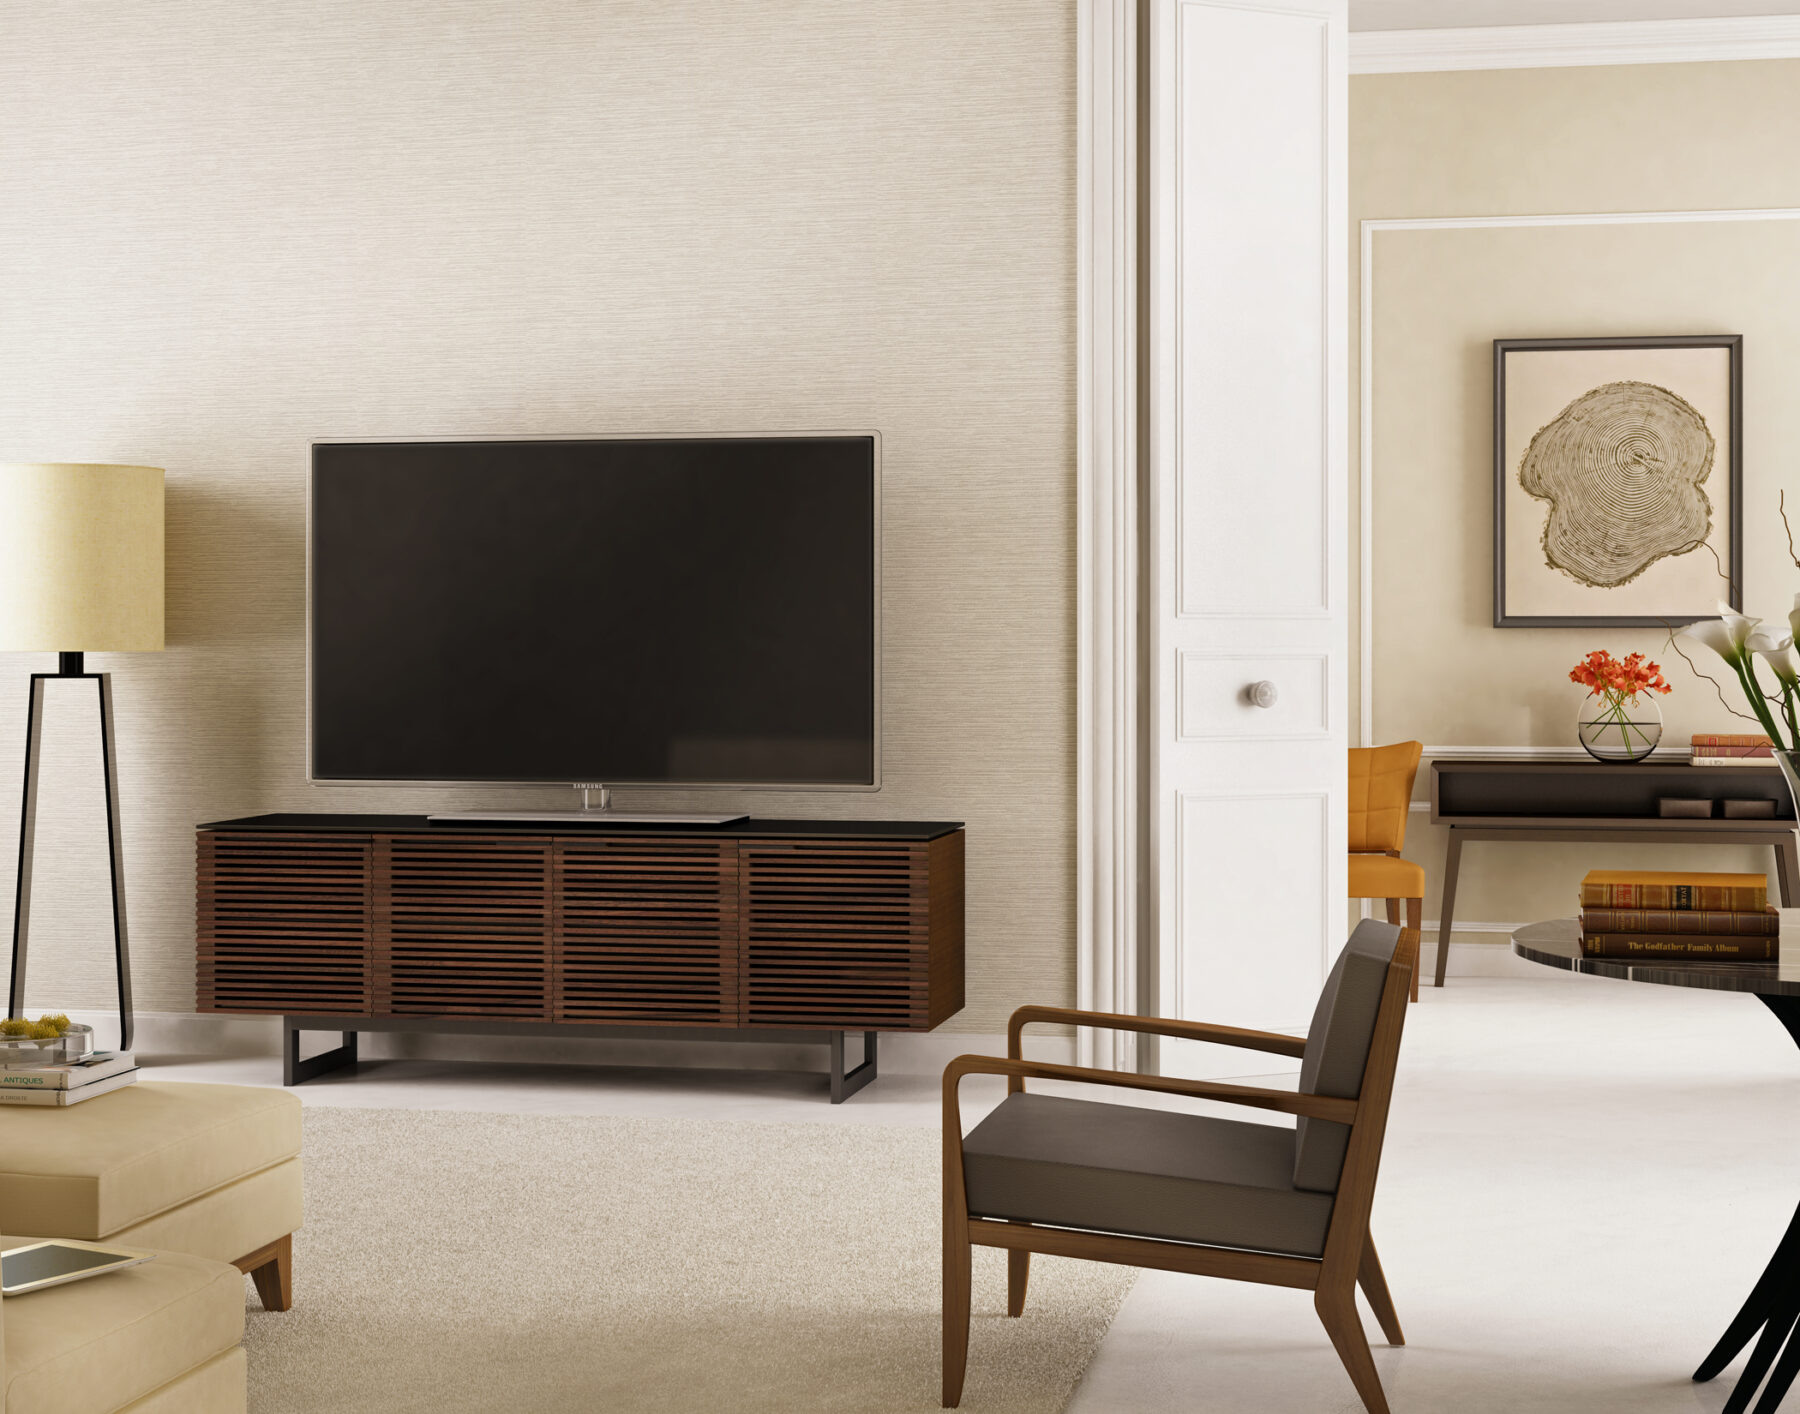 corridor-8179-bdi-chocolate-modern-tv-console-lifestyle-1